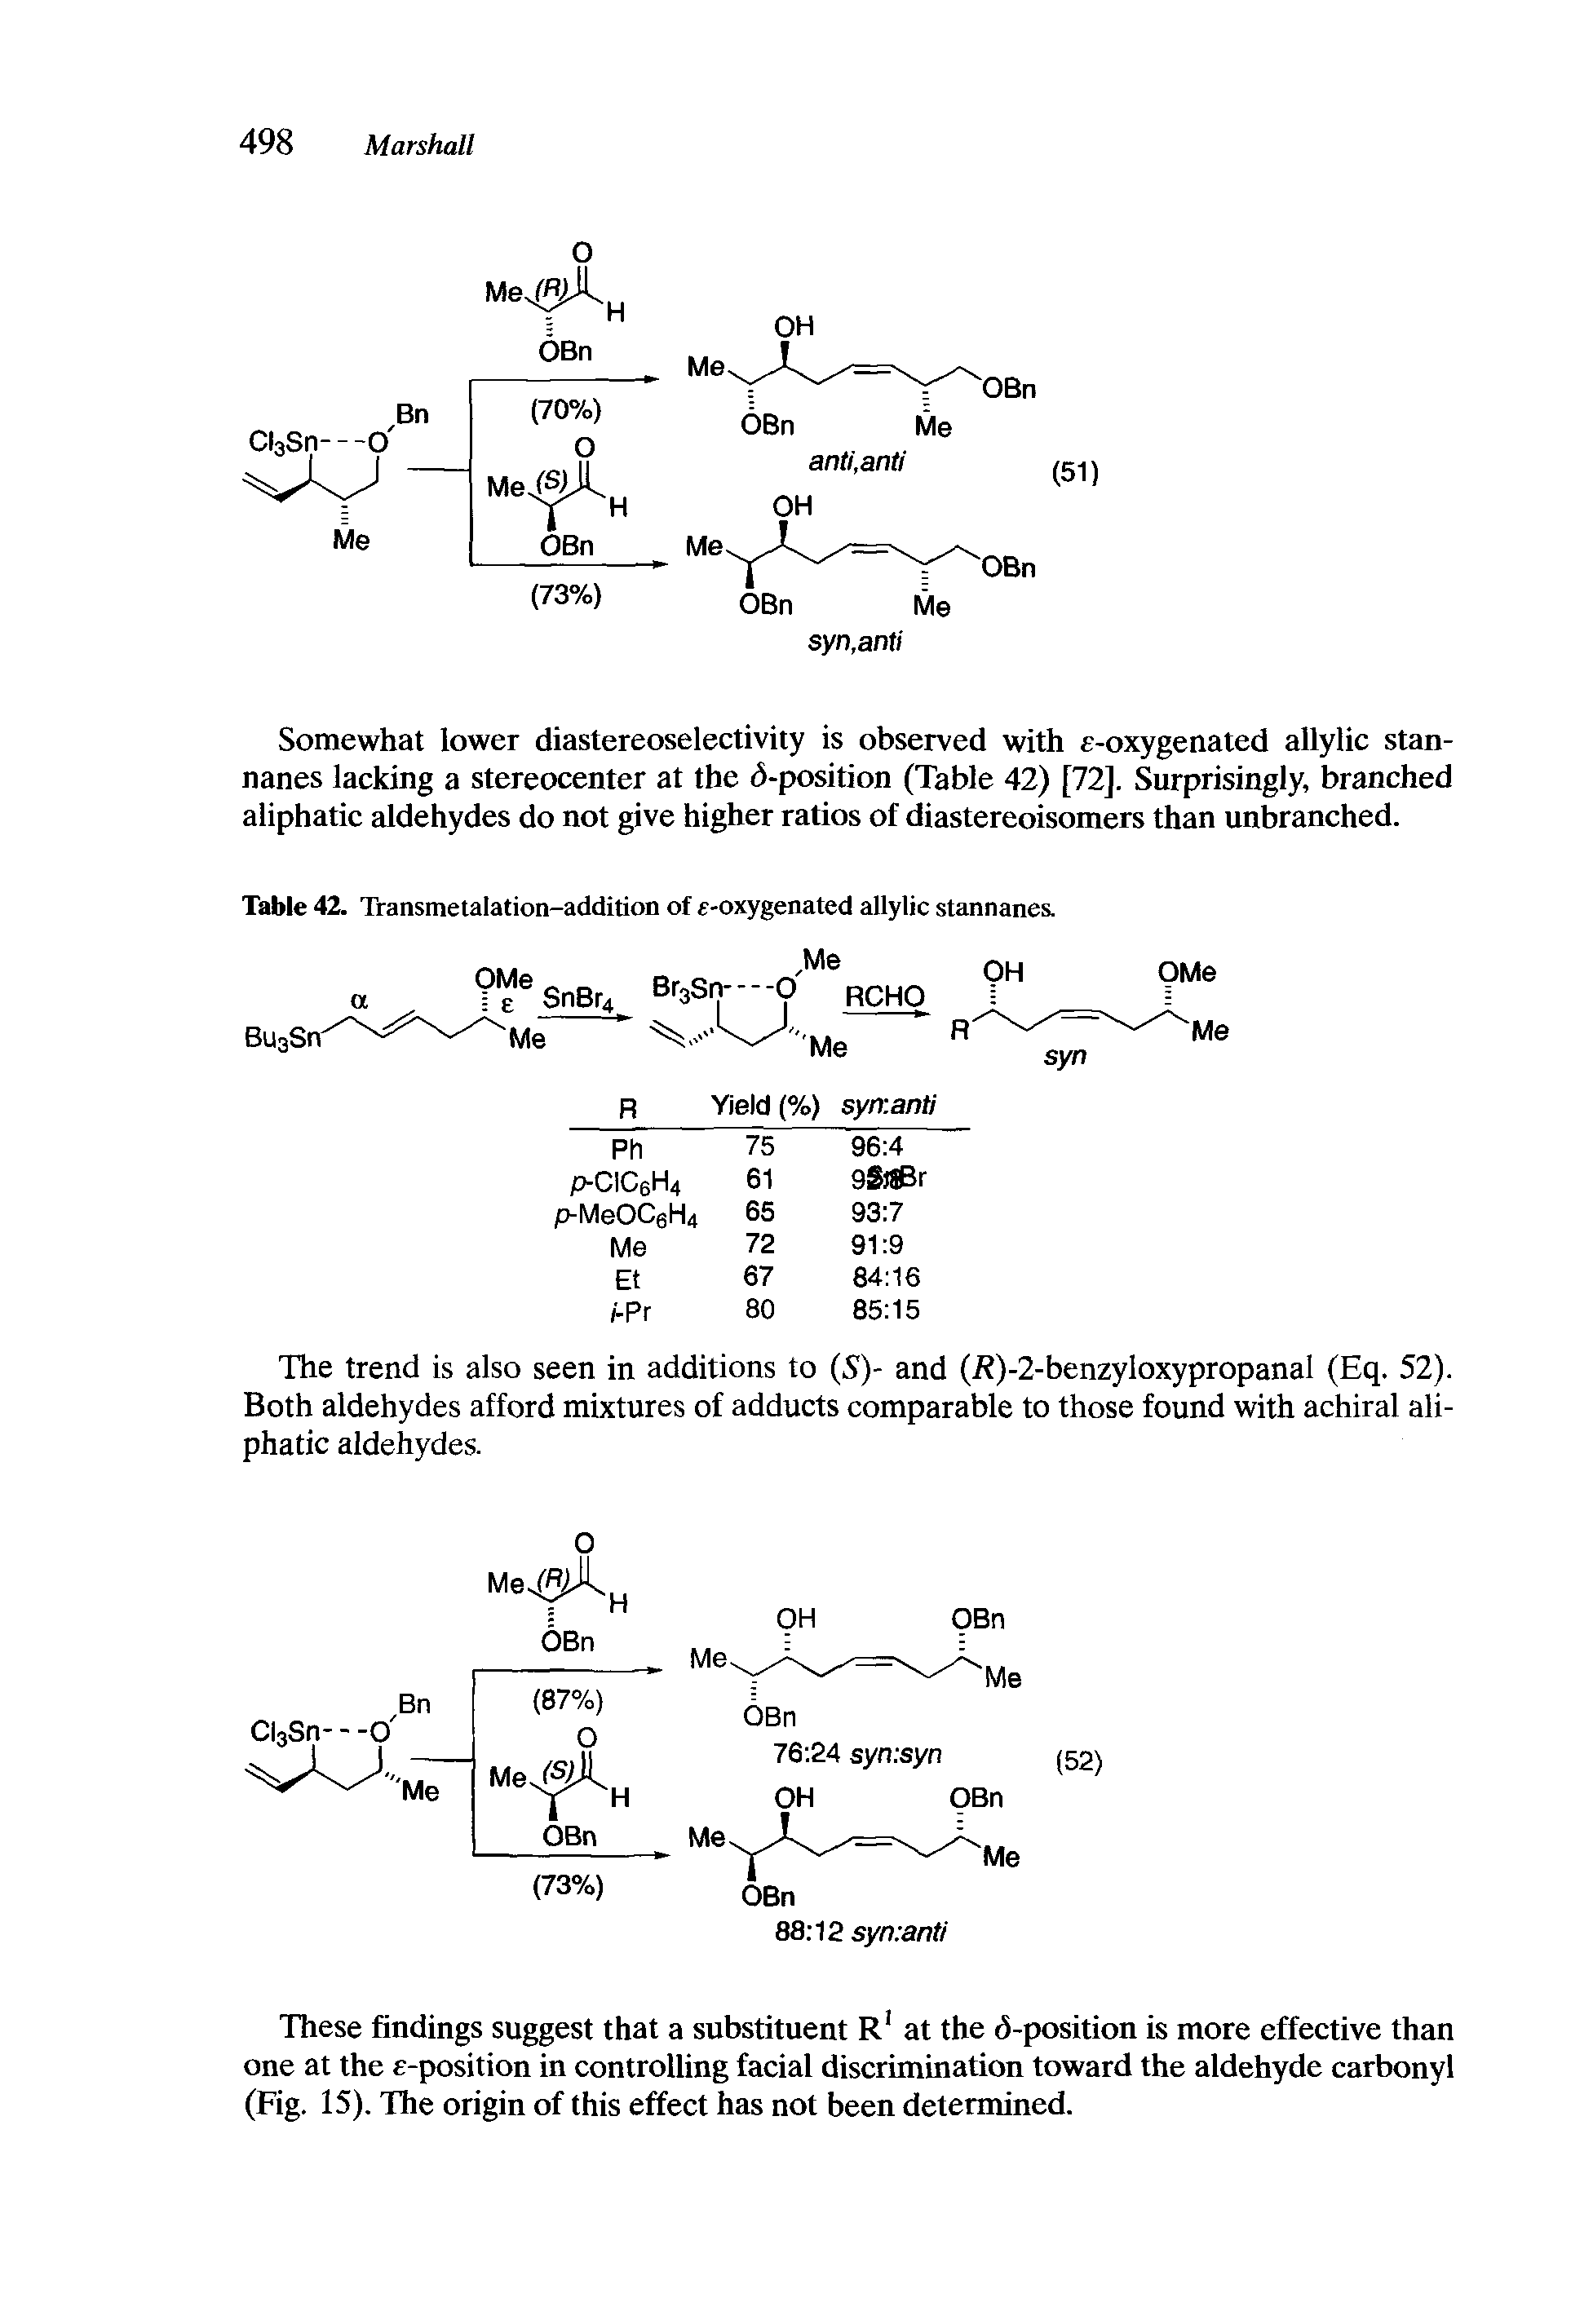 Table 42. Transmetalation-addition of e-oxygenated allylic stannanes.